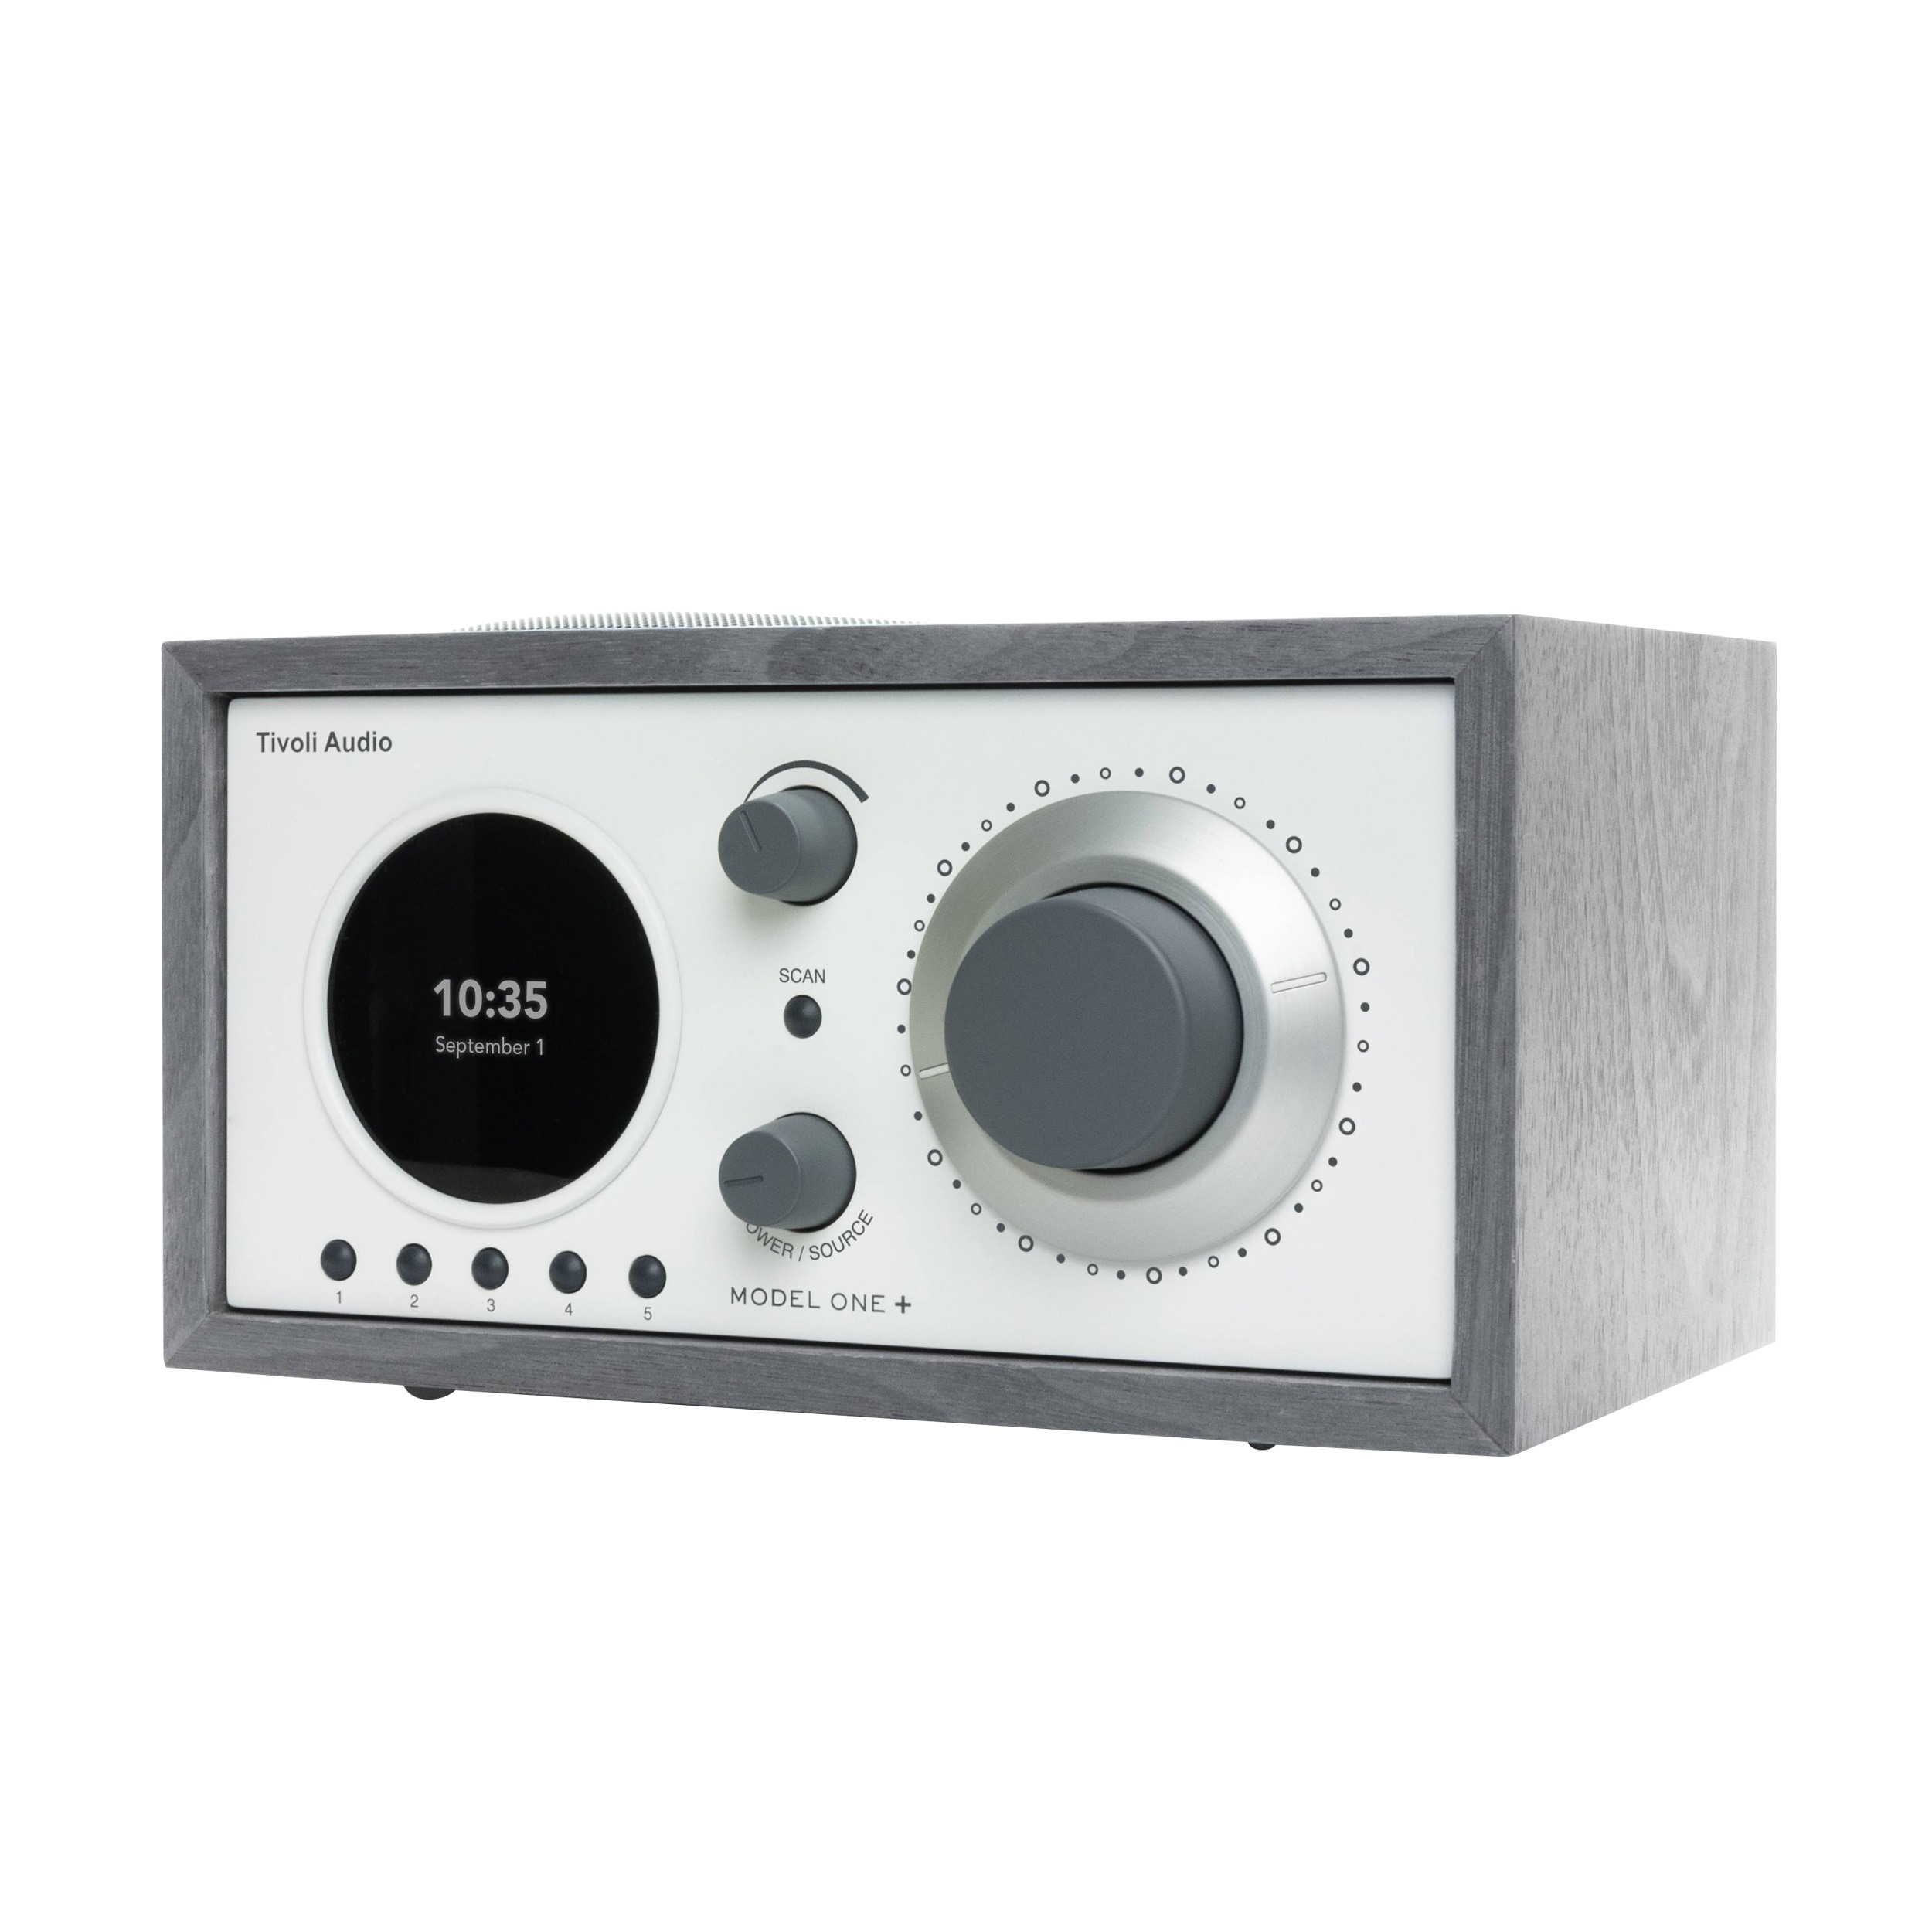 Autoradio Tivoli Audio Model One+